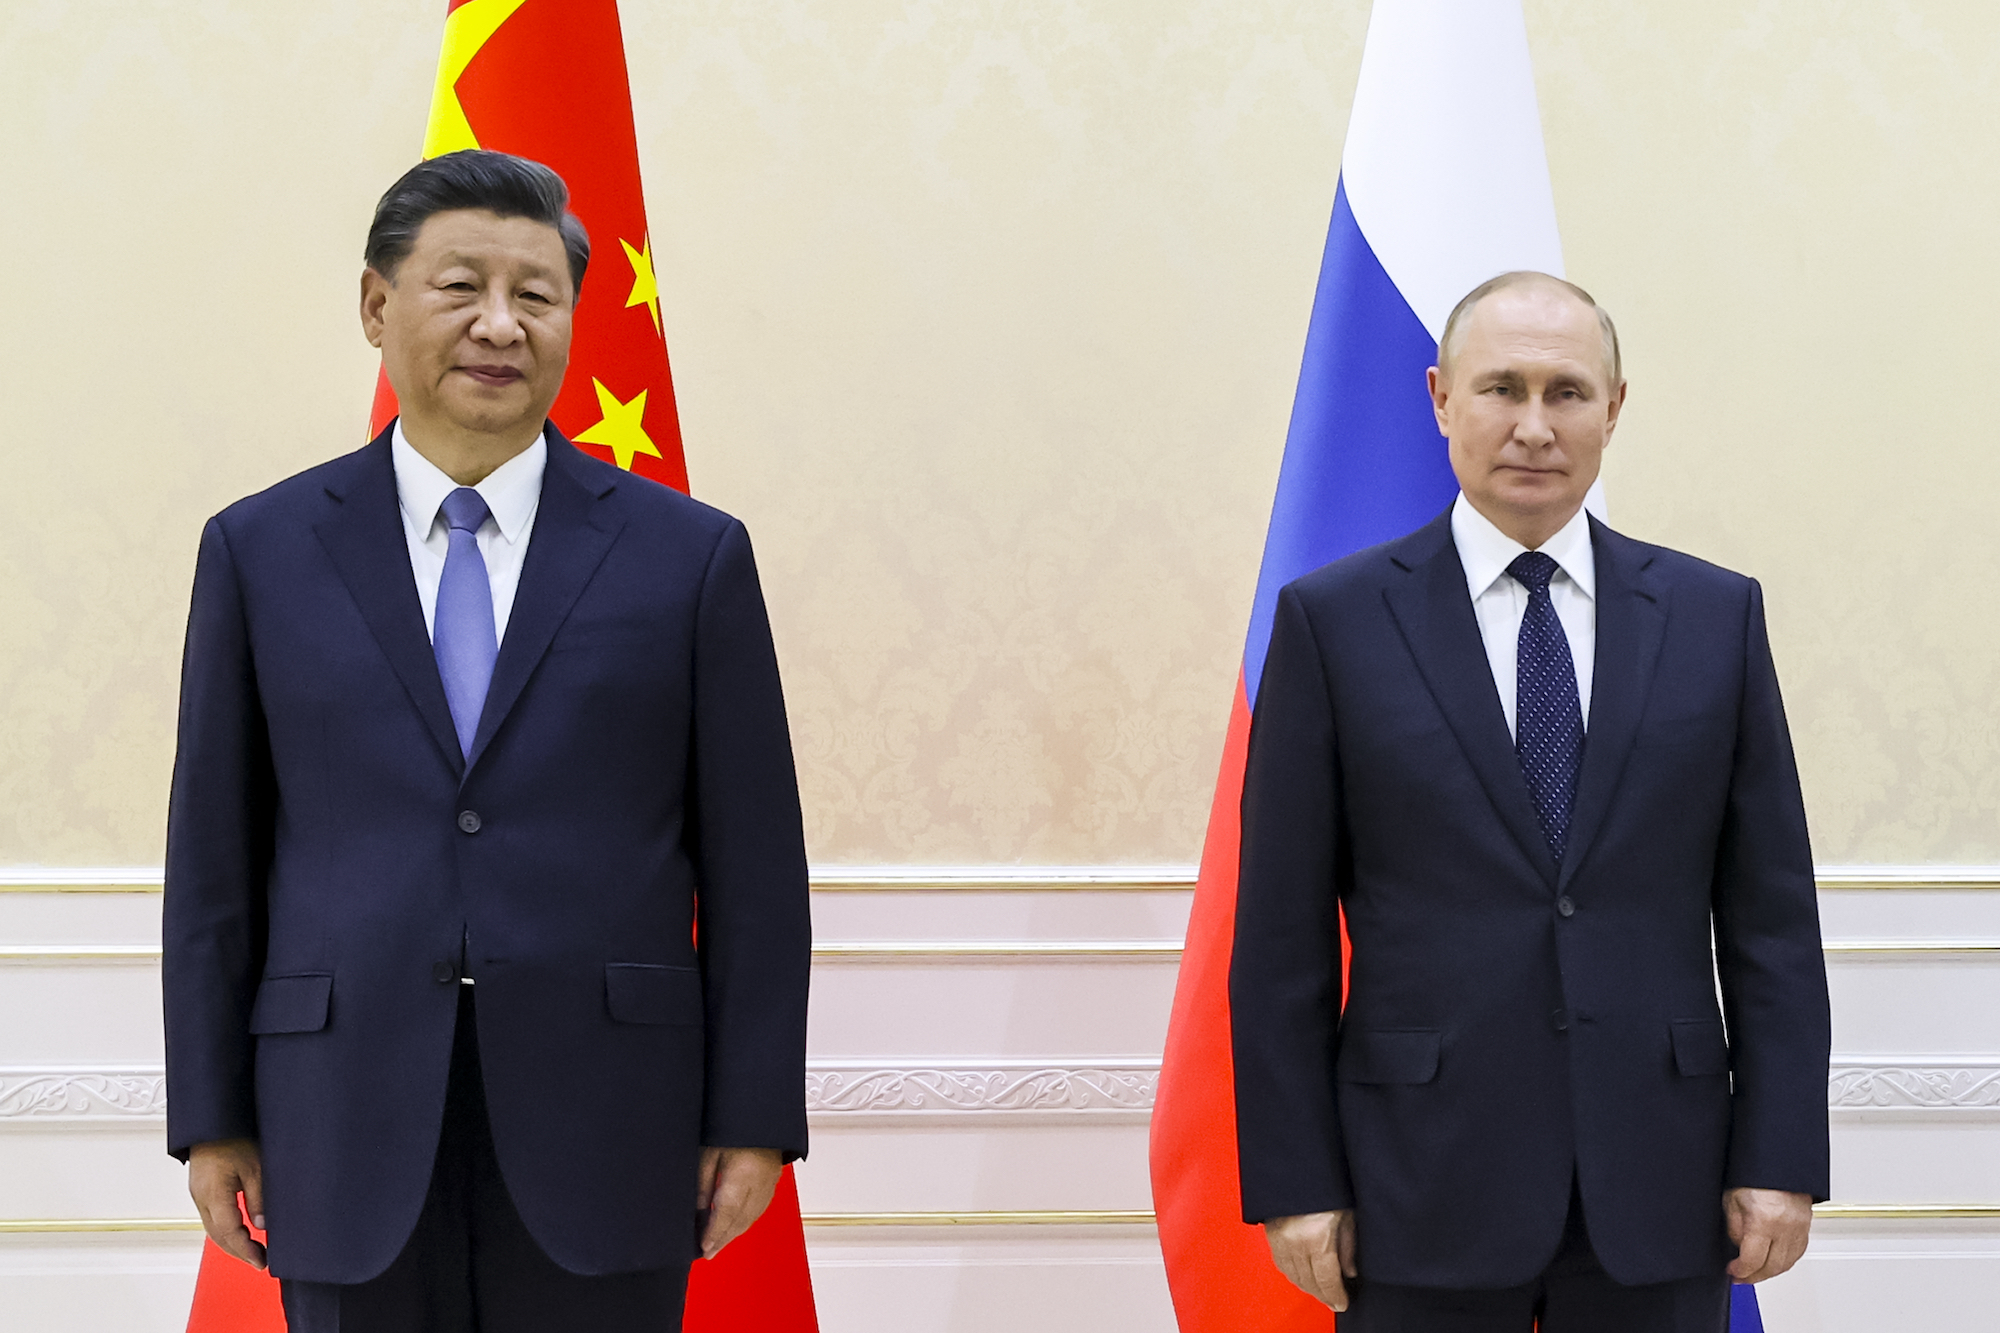 Chinese President Xi Jinping, left, and Russian President Vladimir Putin at the Shanghai Cooperation Organization (SCO) summit in Samarkand, Uzbekistan on Thursday, Sept. 15.